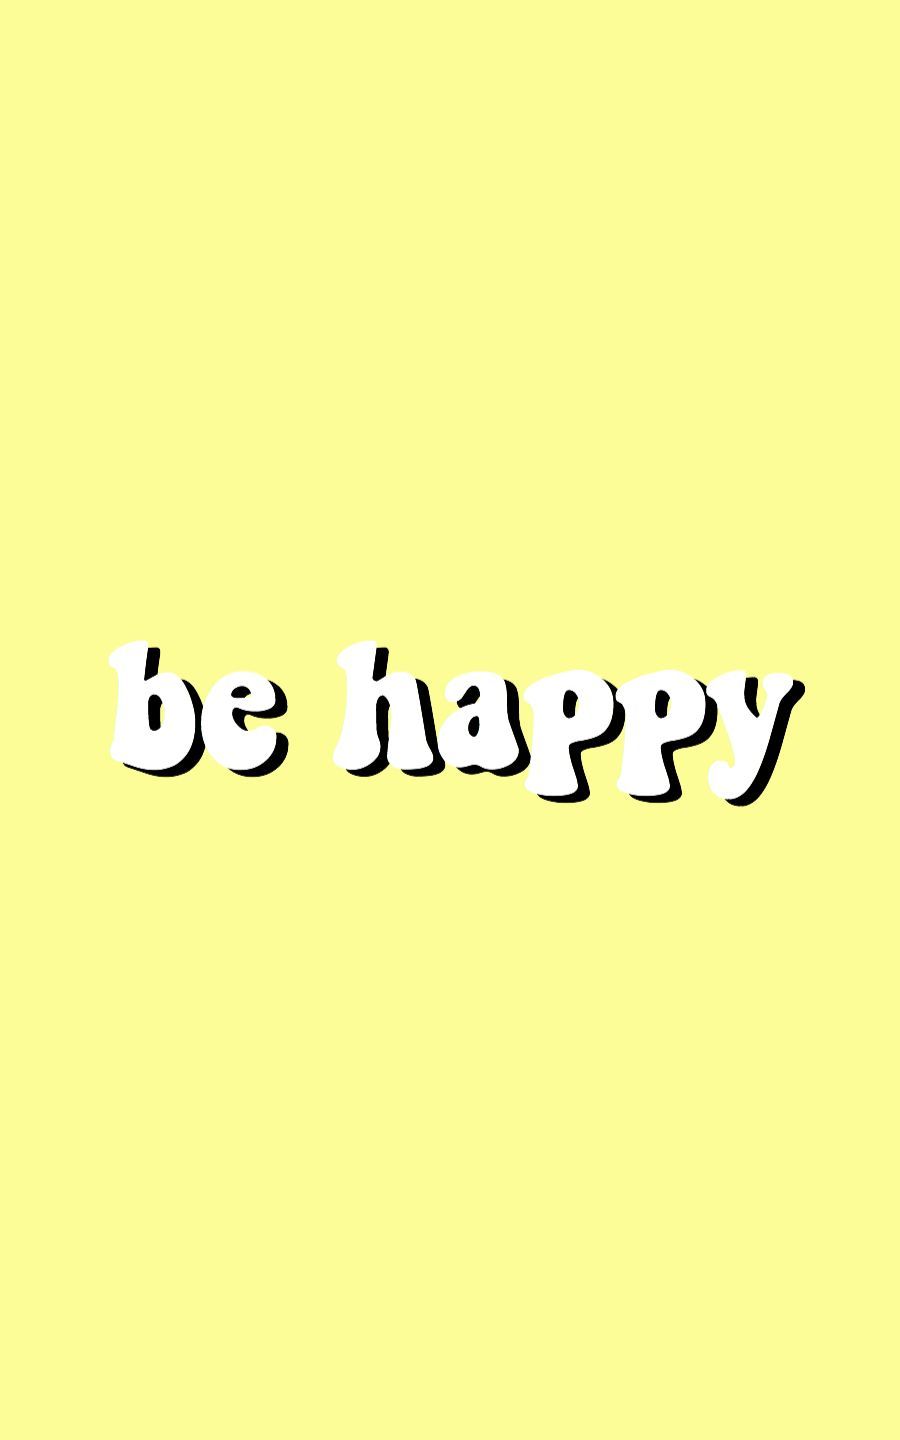 be happy wallpaper. Happy wallpaper, Friends quotes, Happy words